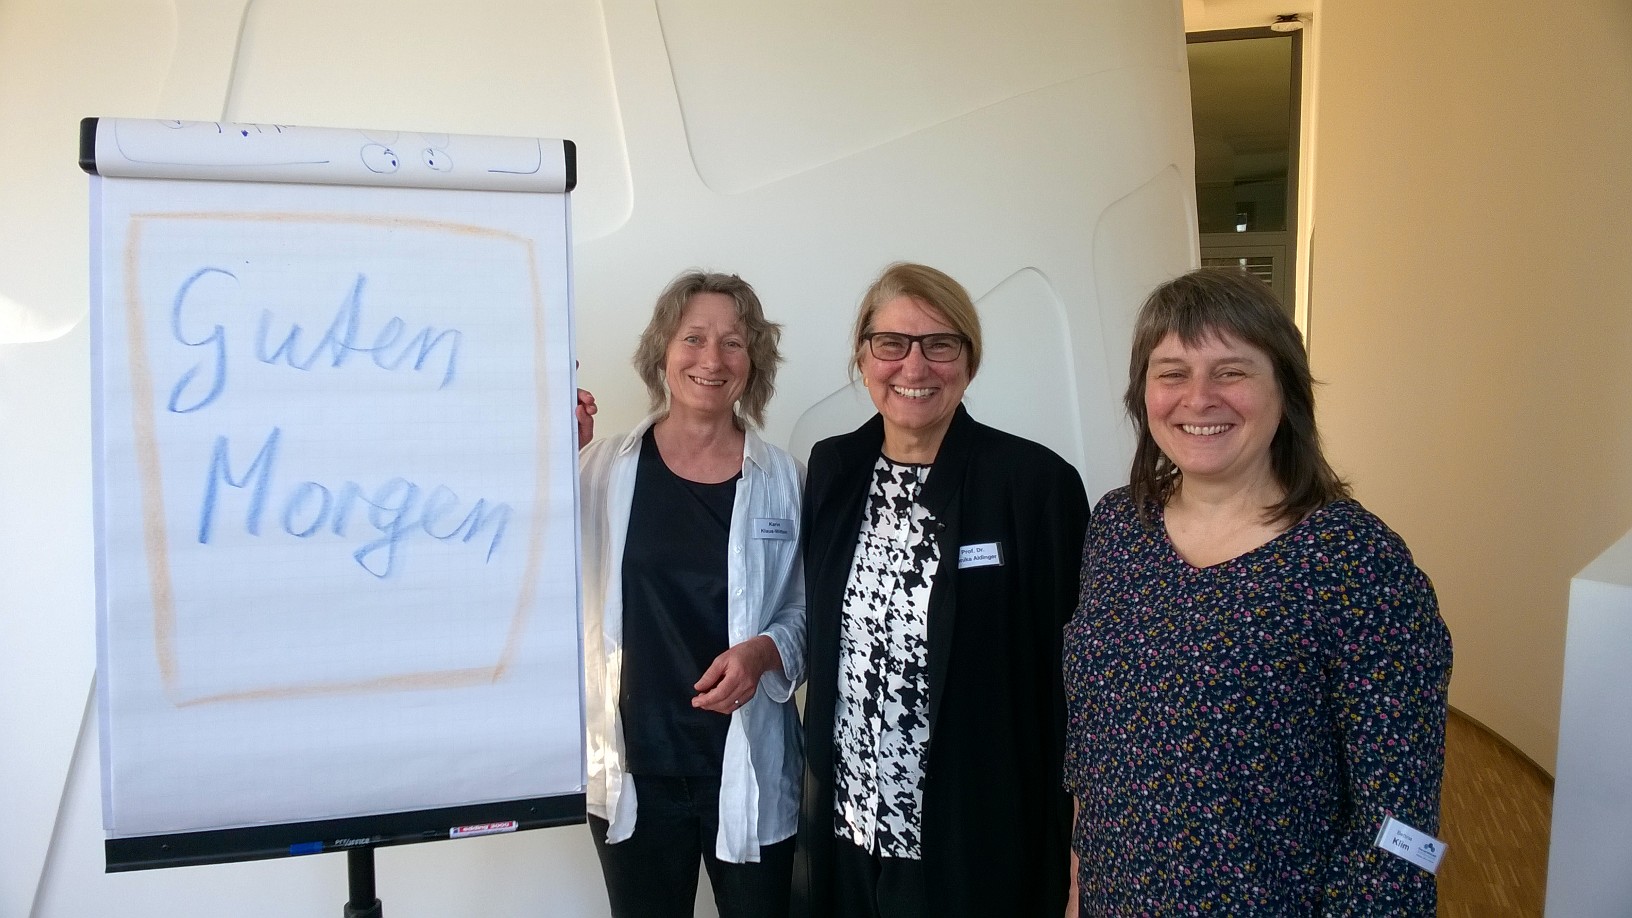 v.l.n.r.: Frau Klaus-Witten, Frau Prof. Dr. Aldinger, Frau Klim